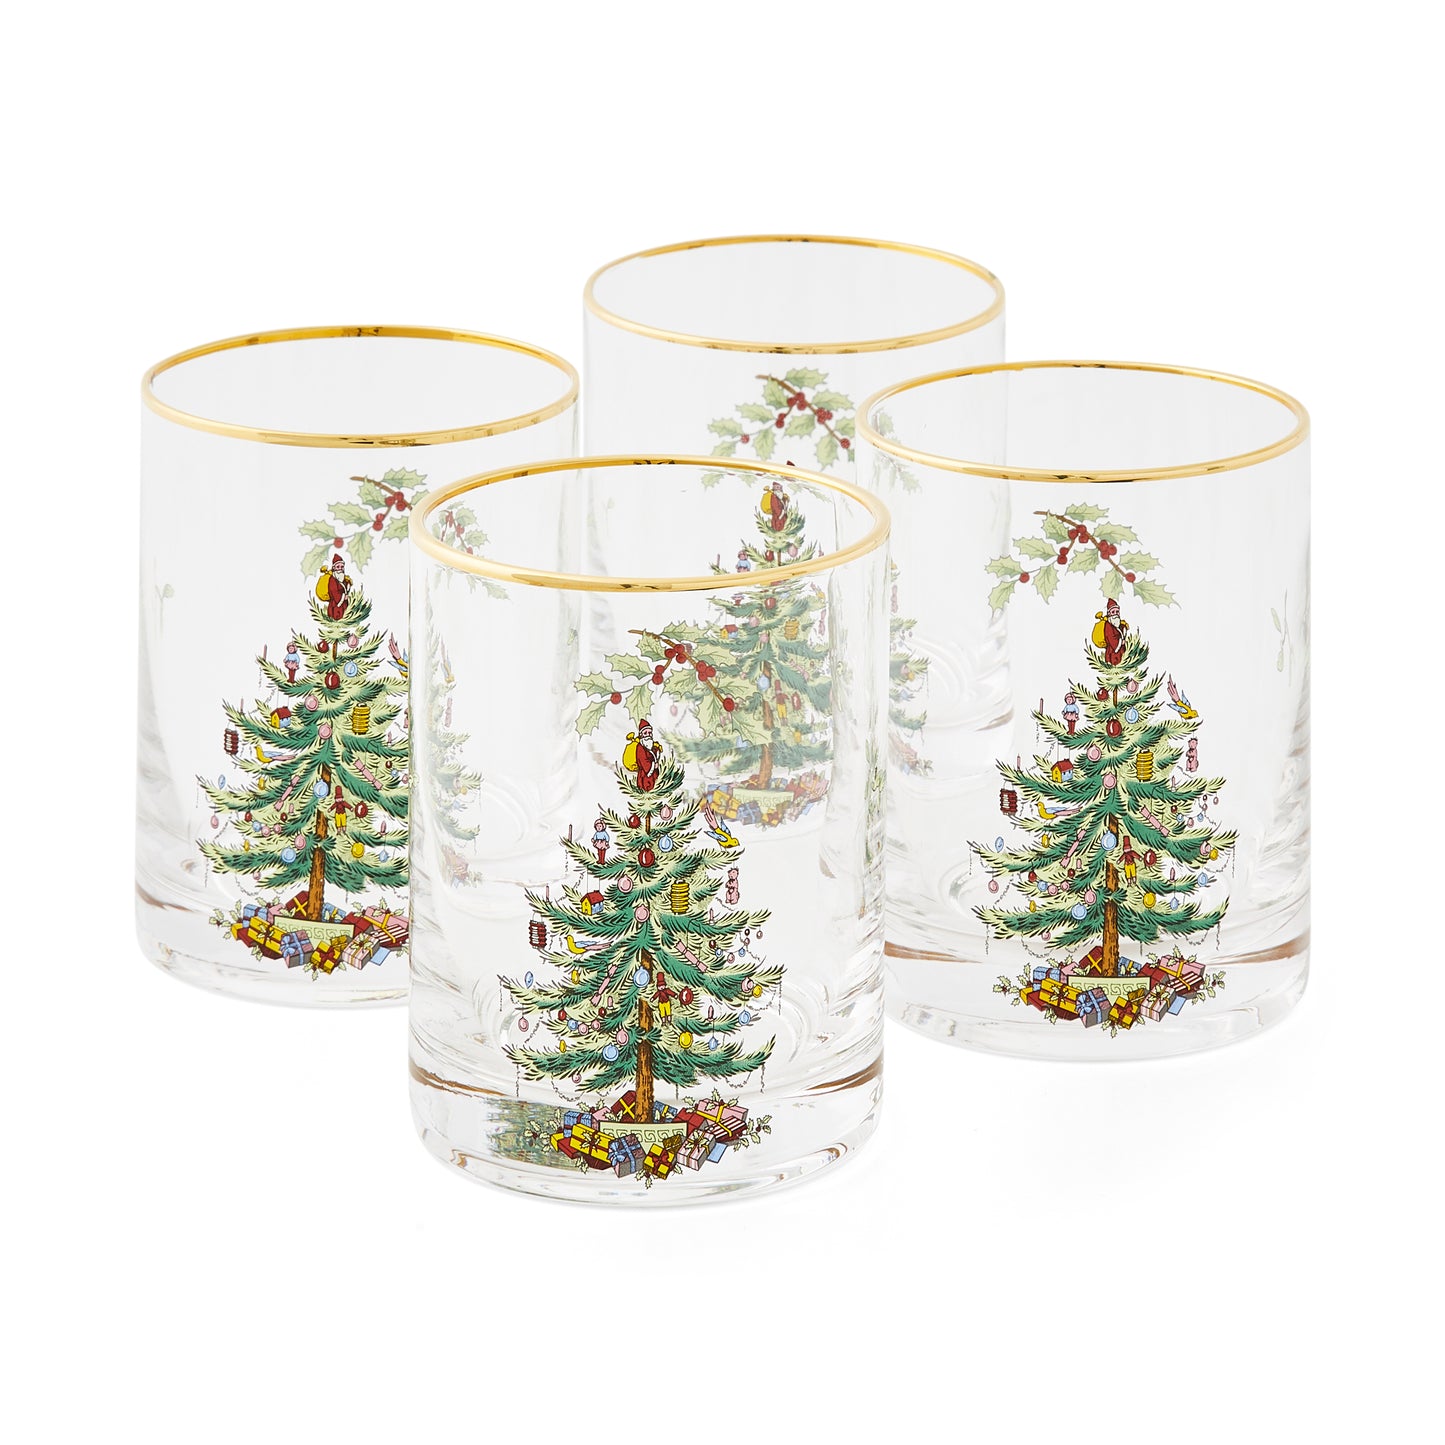 Spode Christmas Tree Set of 4 Lowball Glasses